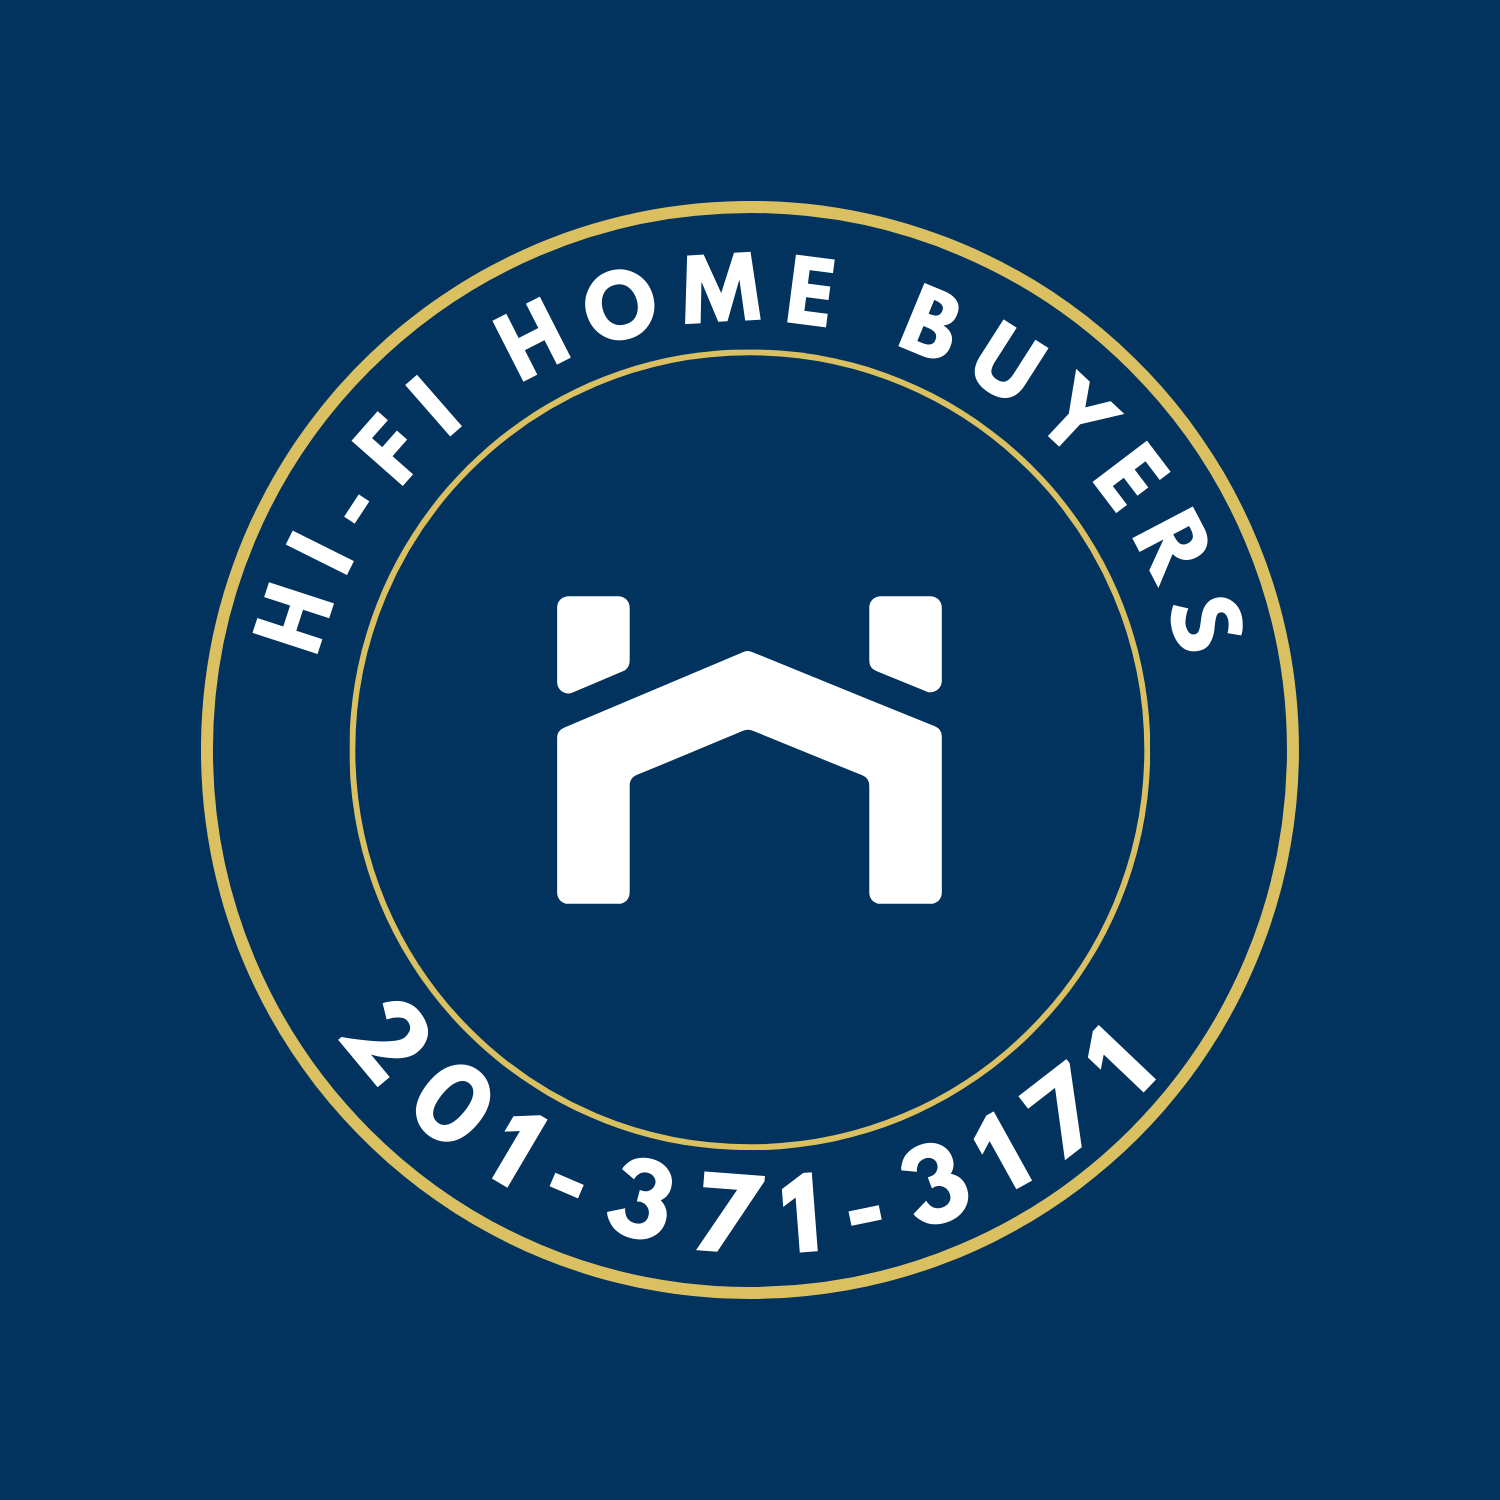 HI FI Home Buyers logo